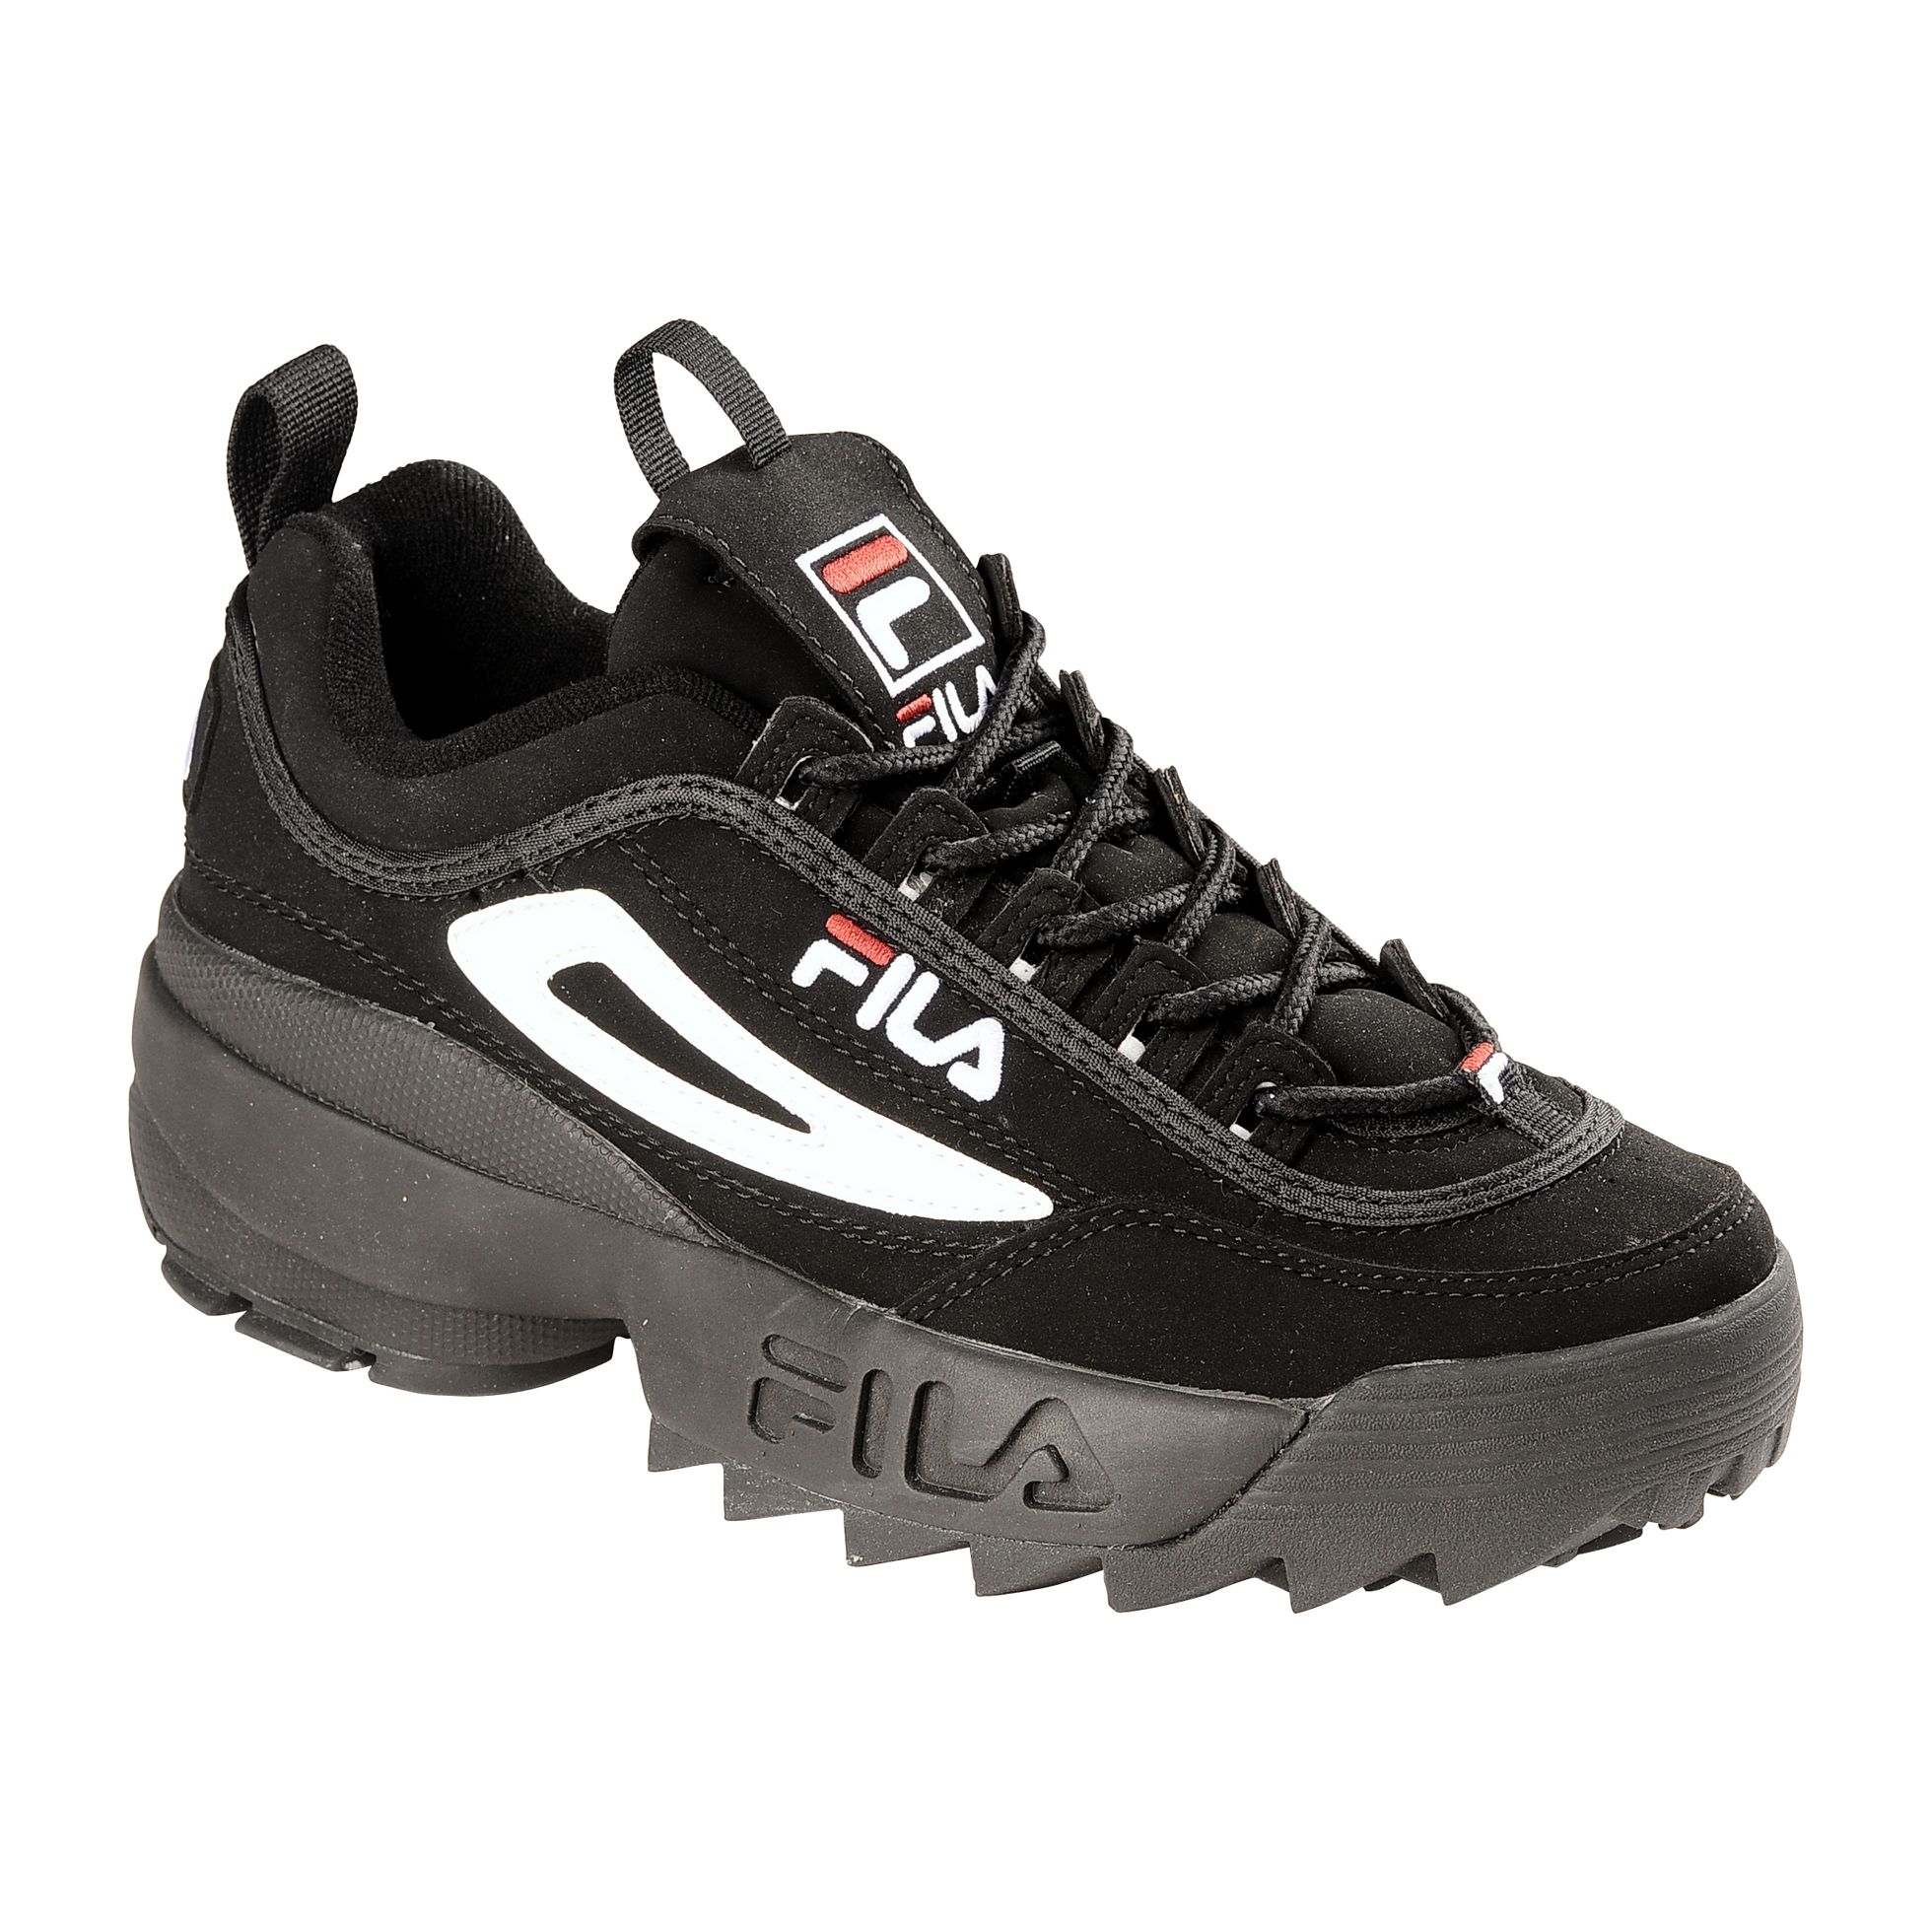 Fila Men's Disruptor Casual Athletic Shoe - Black/White/Red